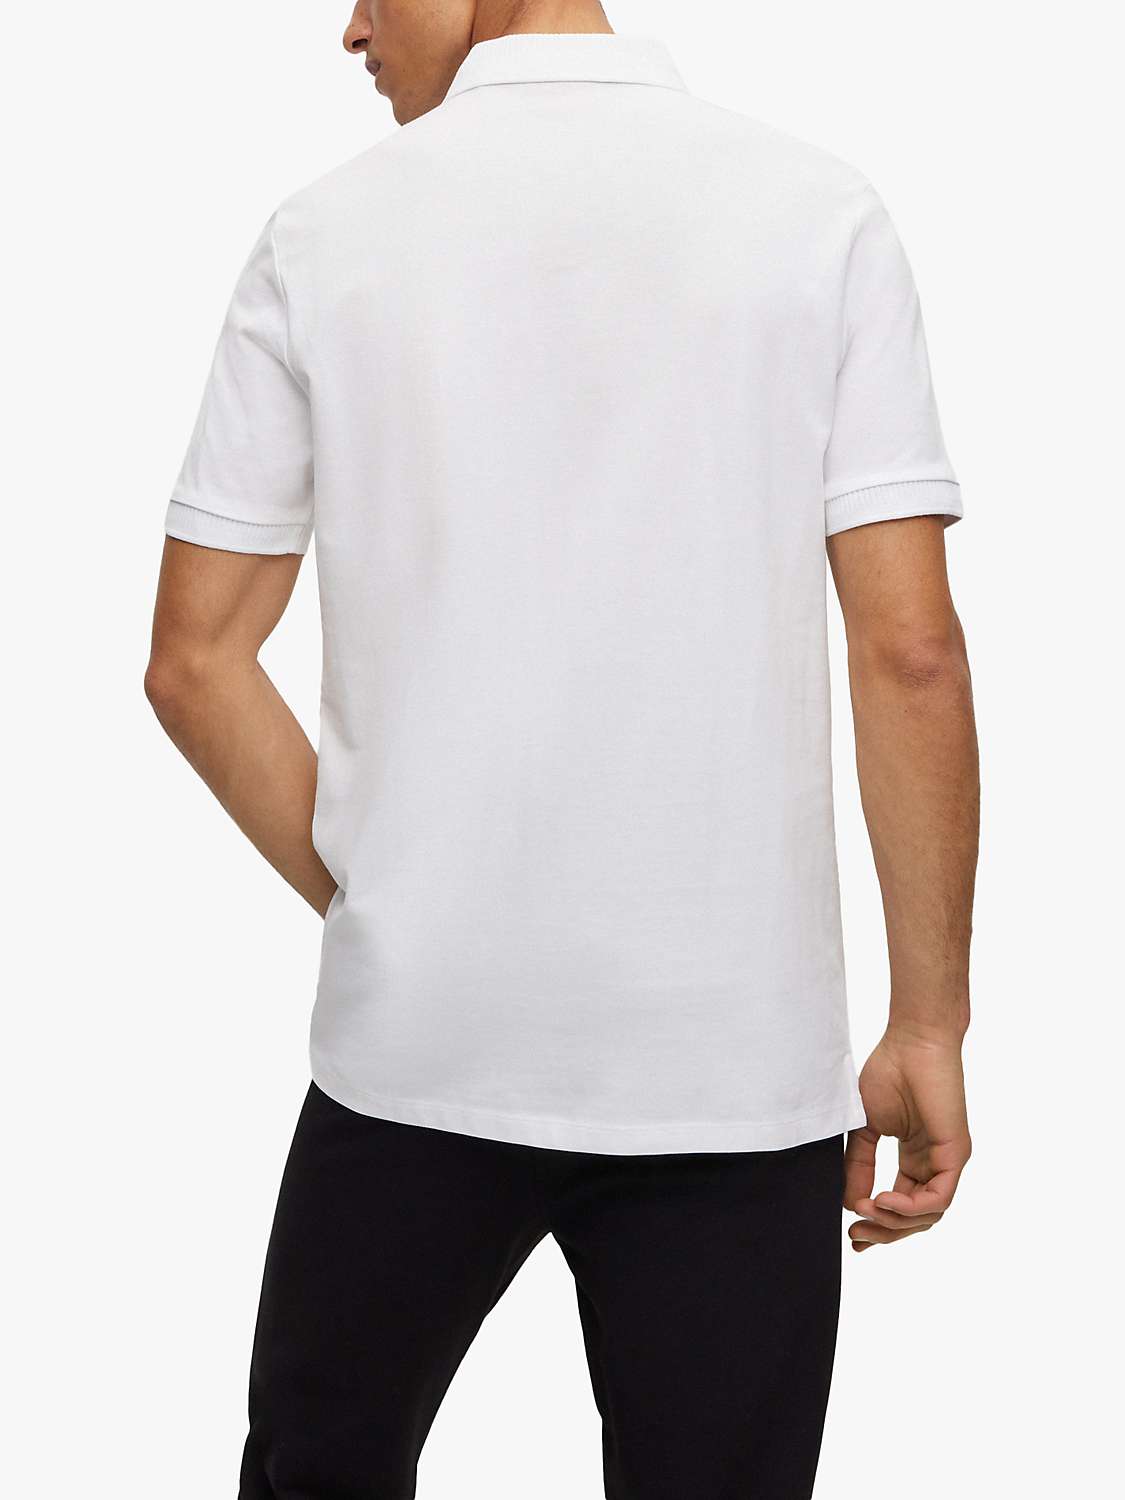 Buy HUGO Dereso Slim Fit Polo Shirt Online at johnlewis.com